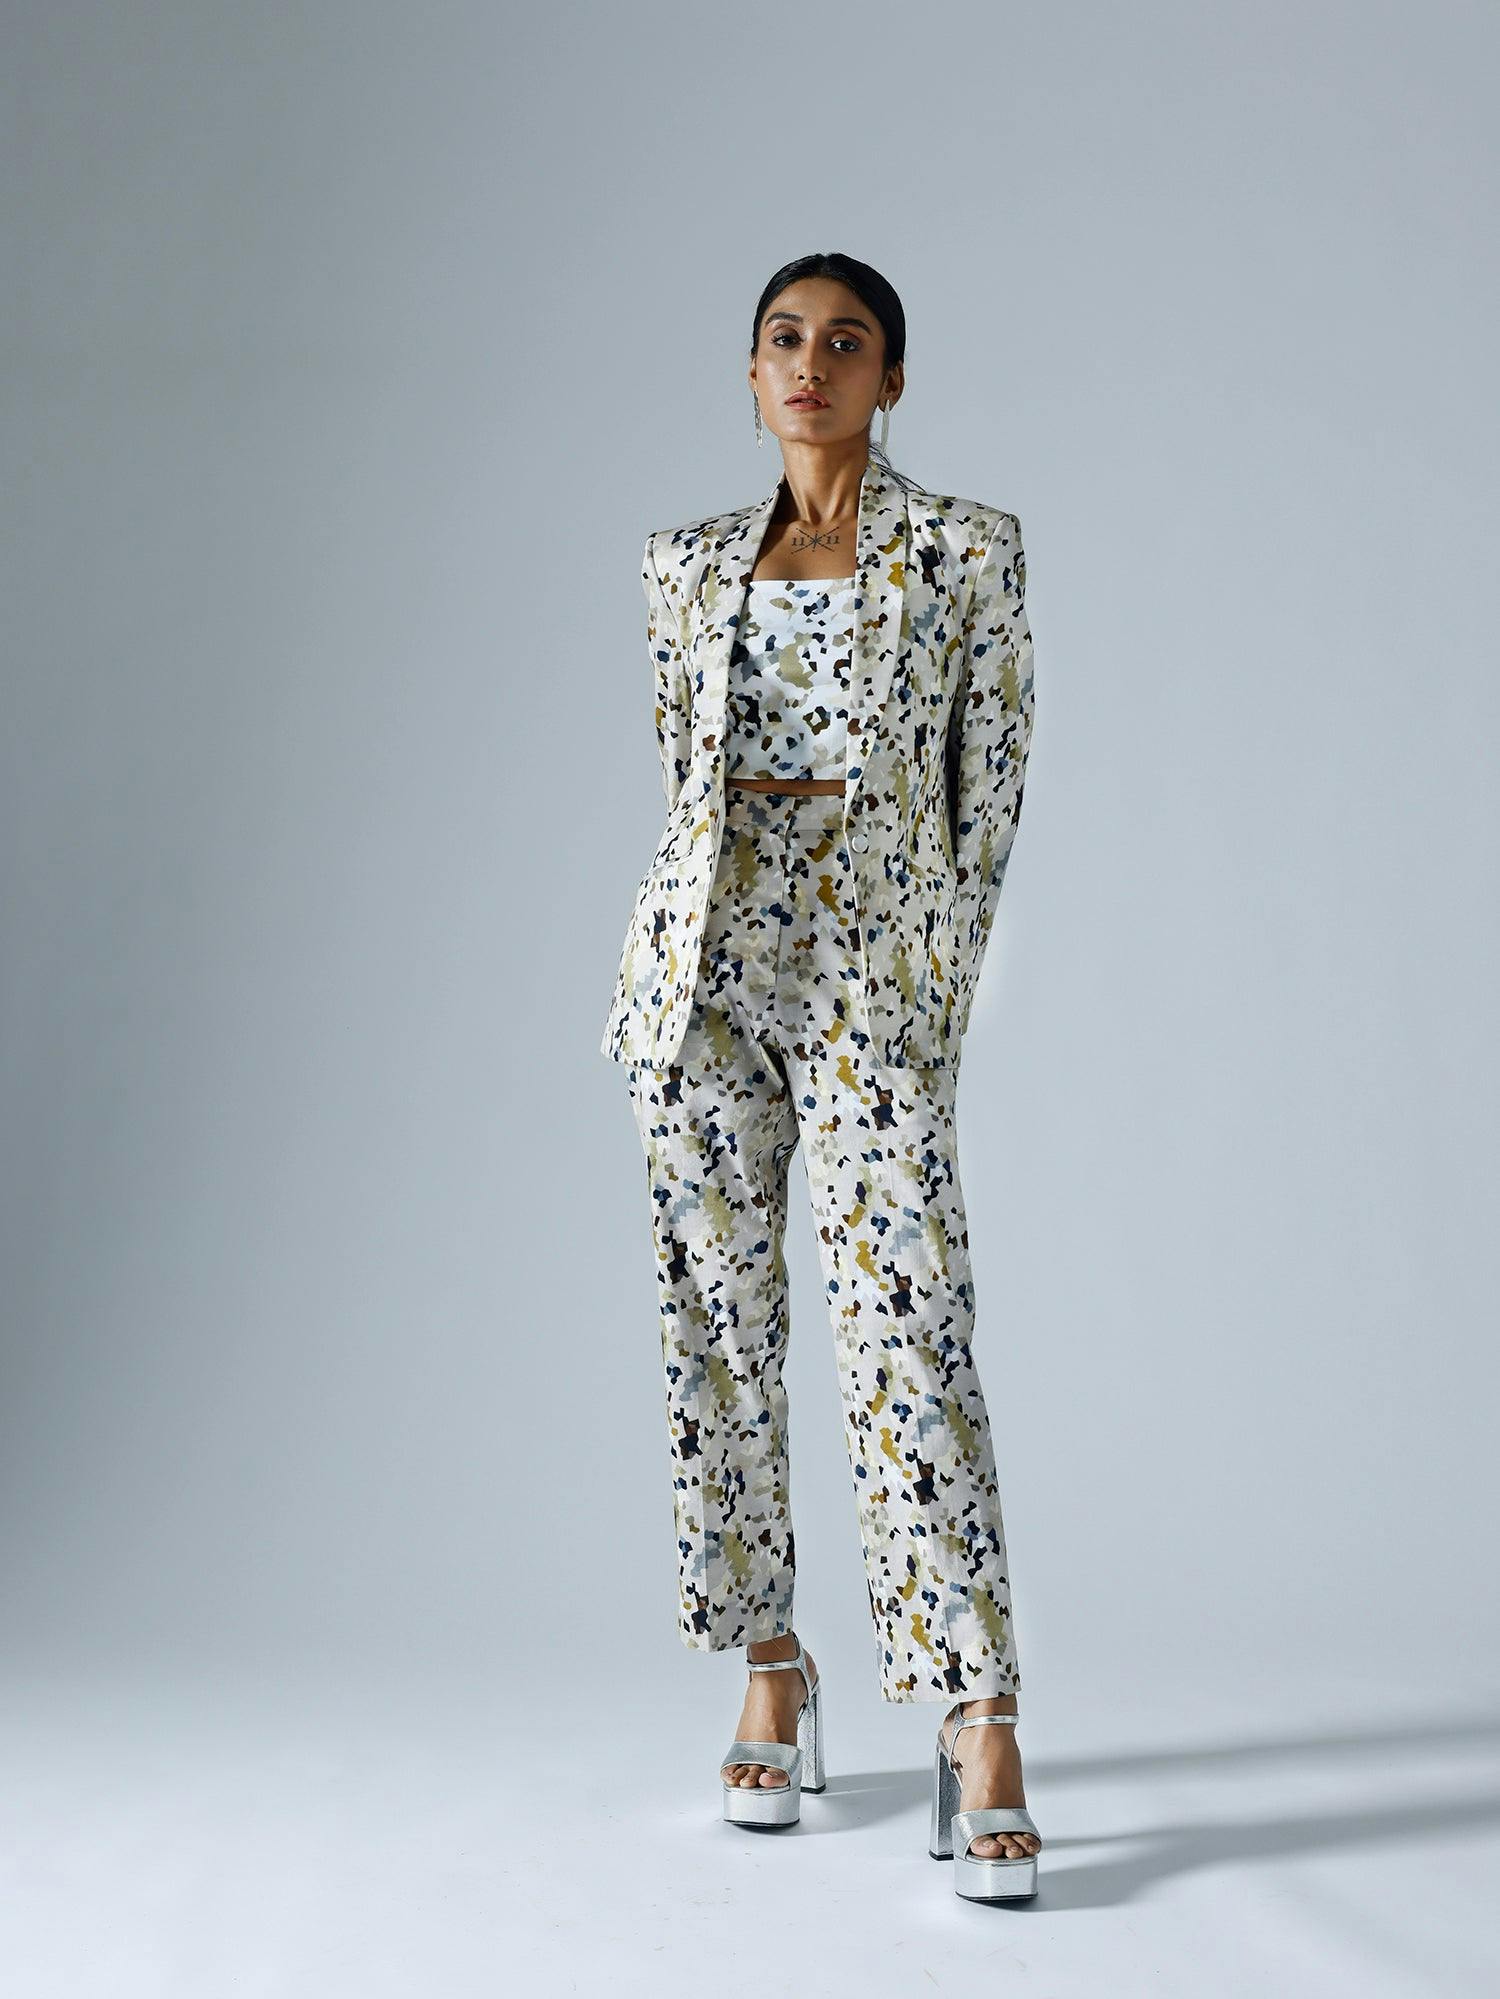 Pixelated Grey Pant Suit, a product by KLAD